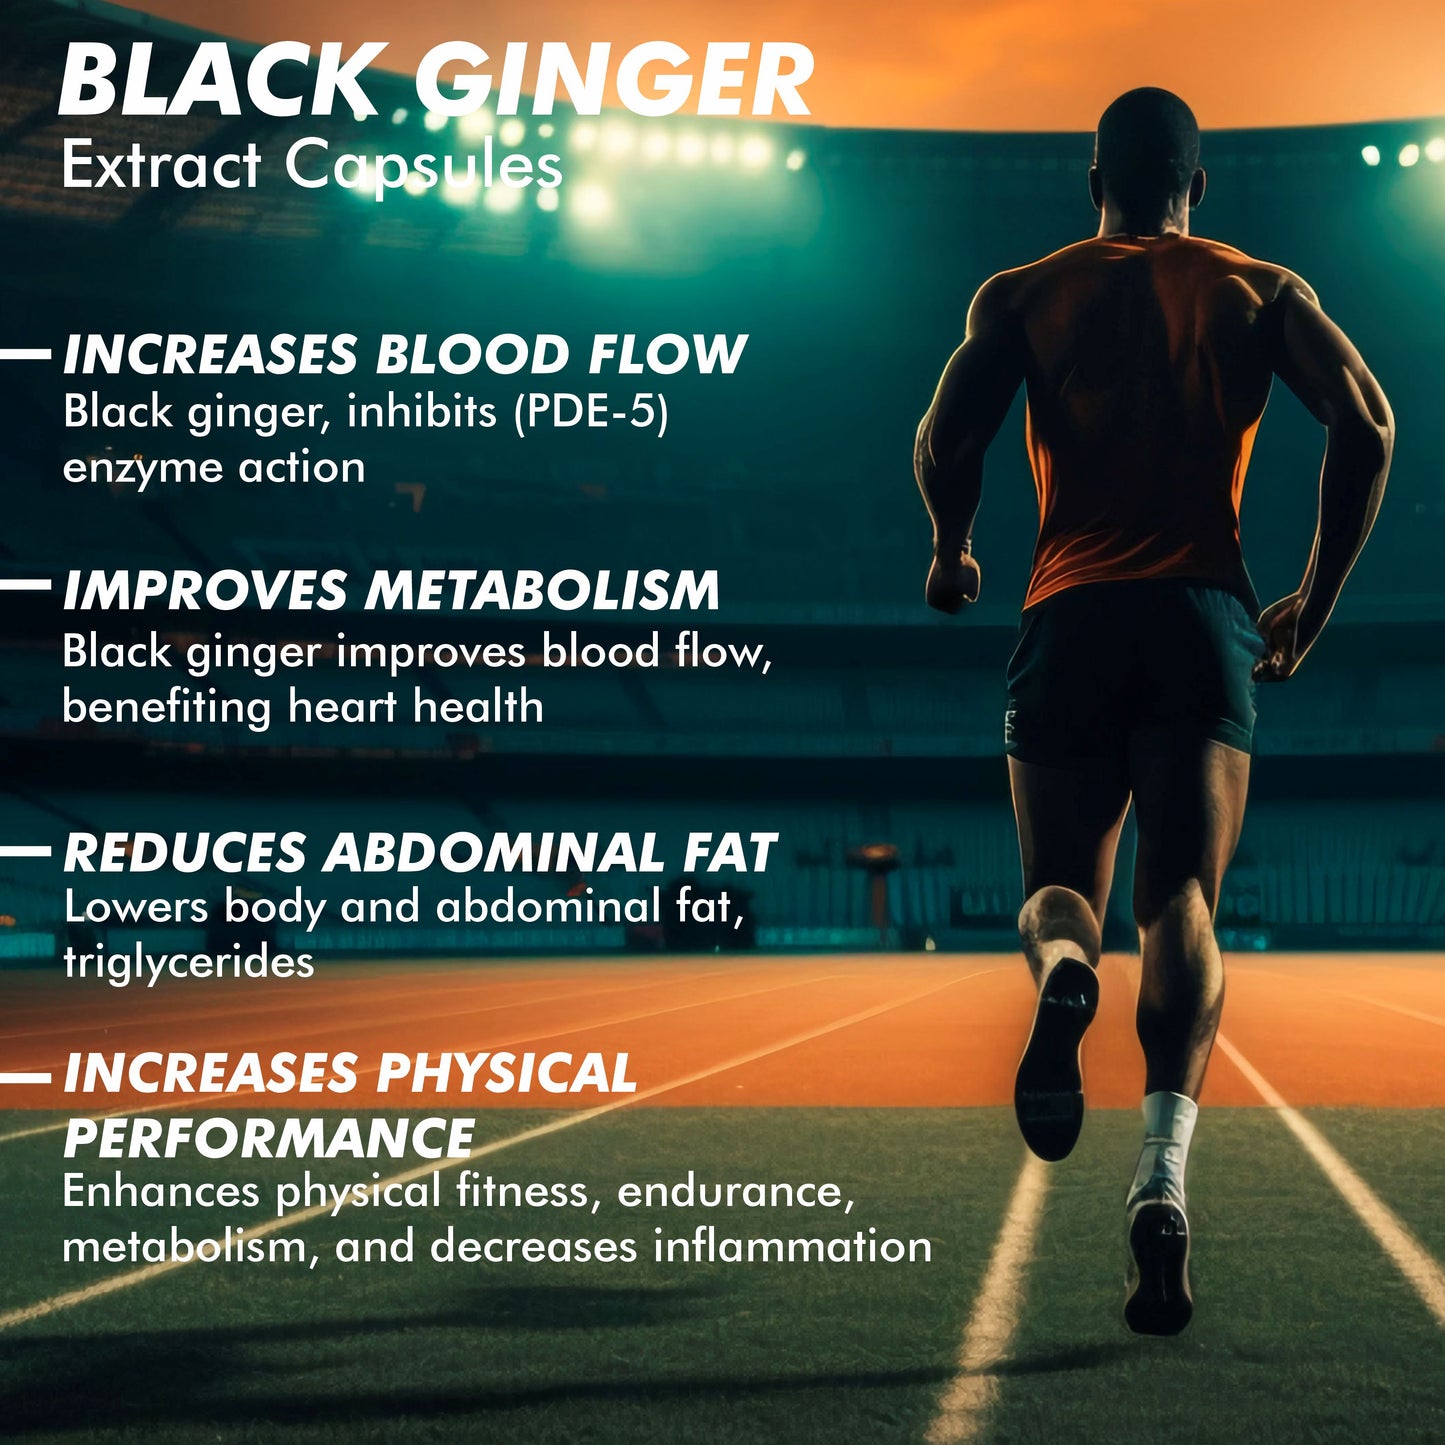 Vitaminnica Black Ginger- 60 Capsules for Men & Women | Energy Boost, Anti-Inflammatory Properties - Vitaminnica Healthcare